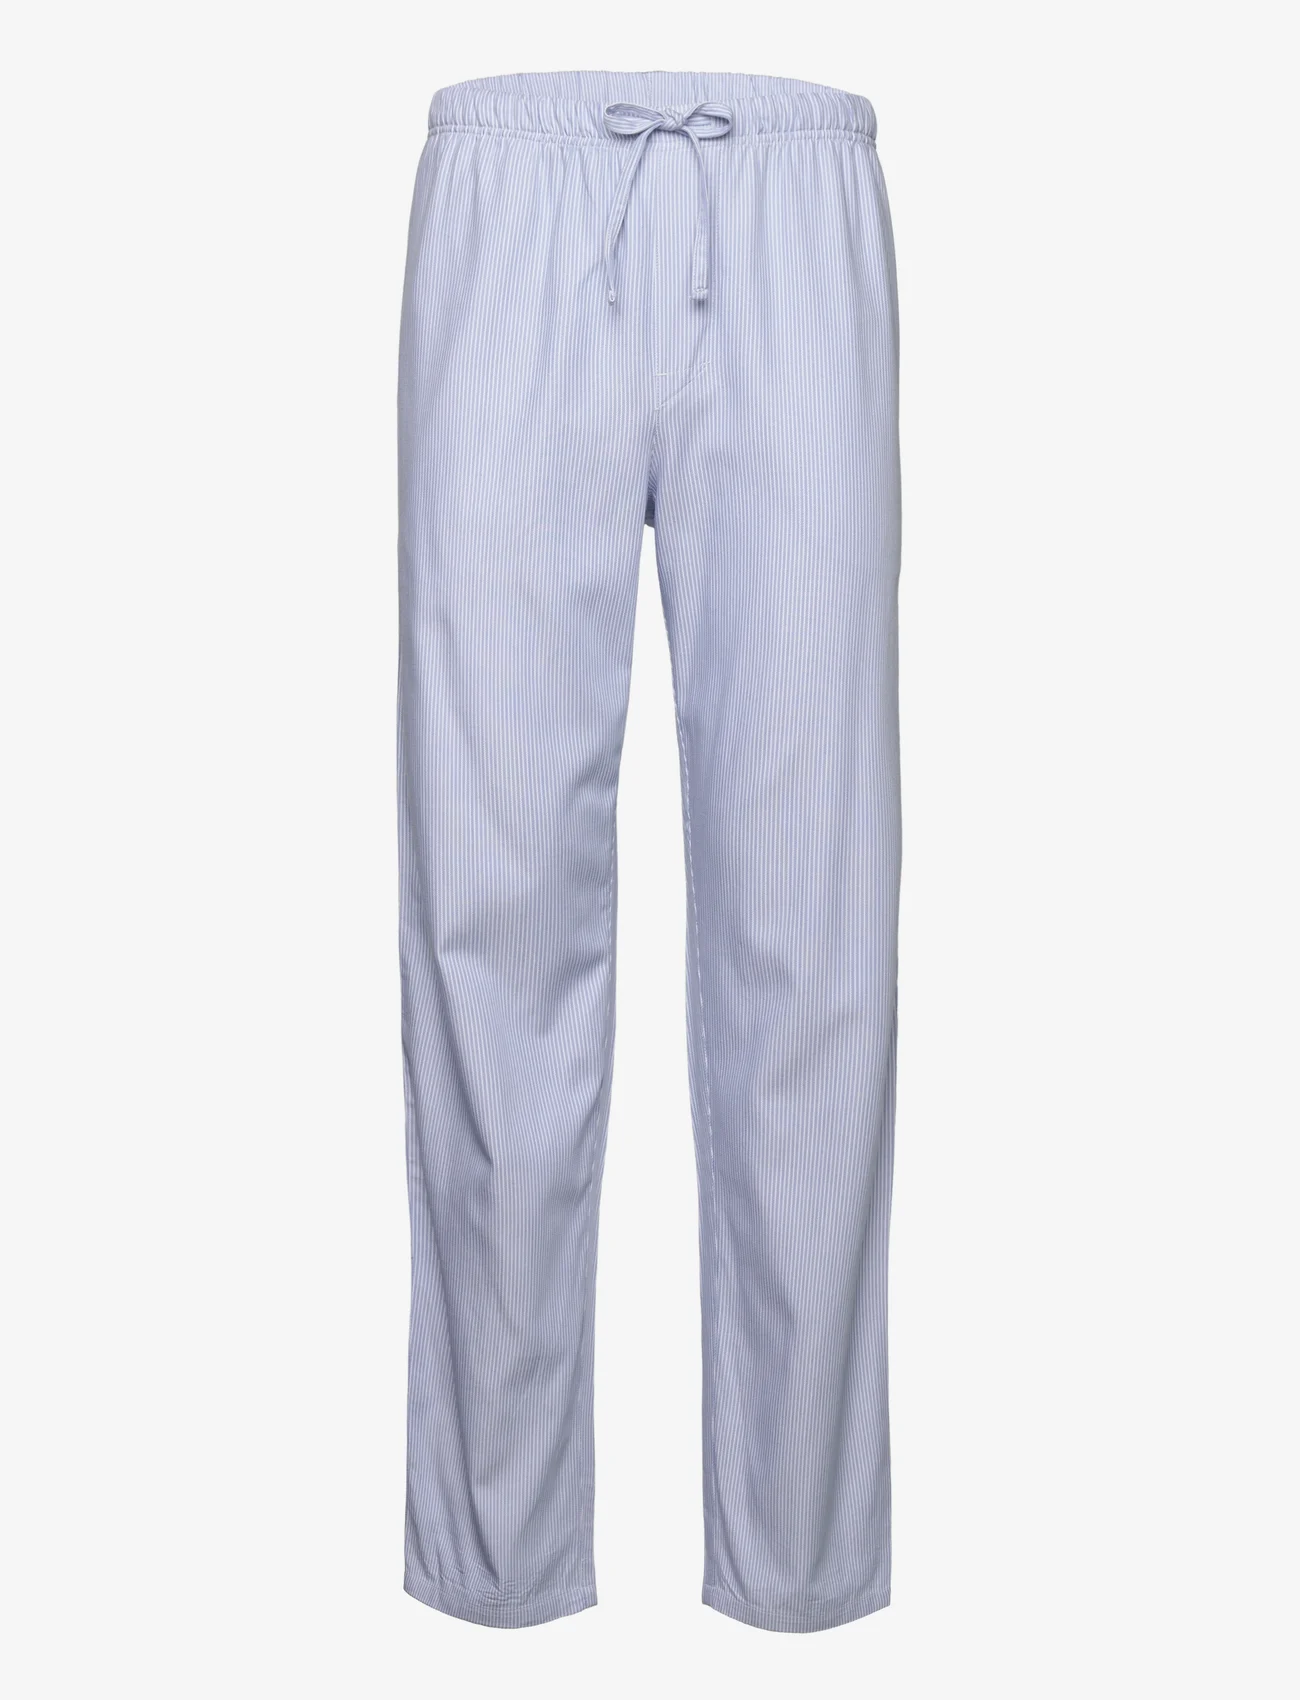 JBS of Denmark - JBS of DK PJ Pant - pyjama bottoms - blue - 0